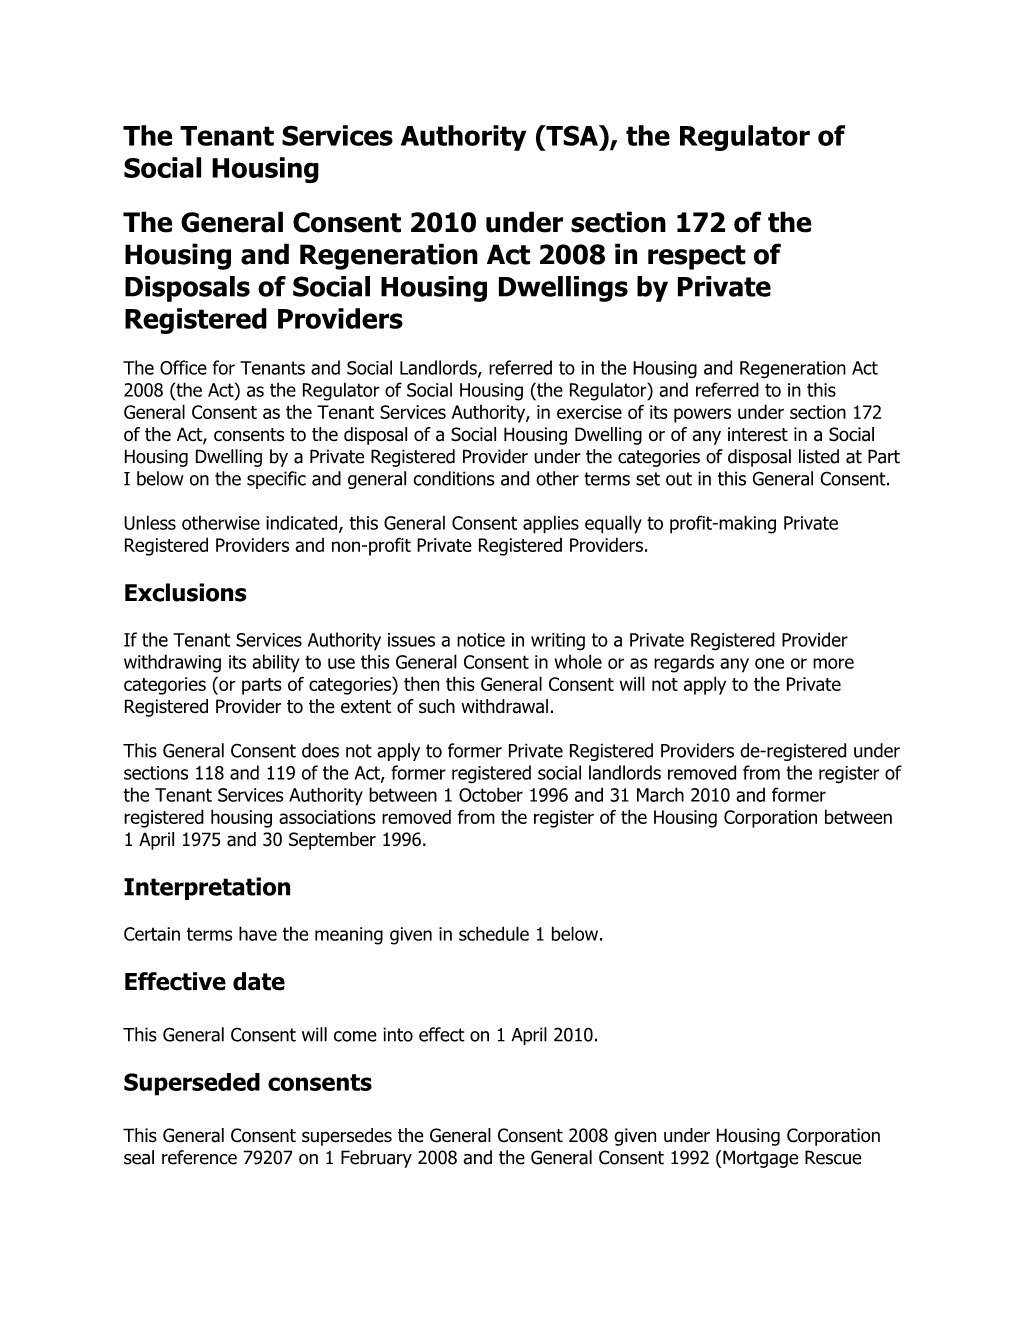 The New Regulatory Framework for Social Housing in England from April 2010